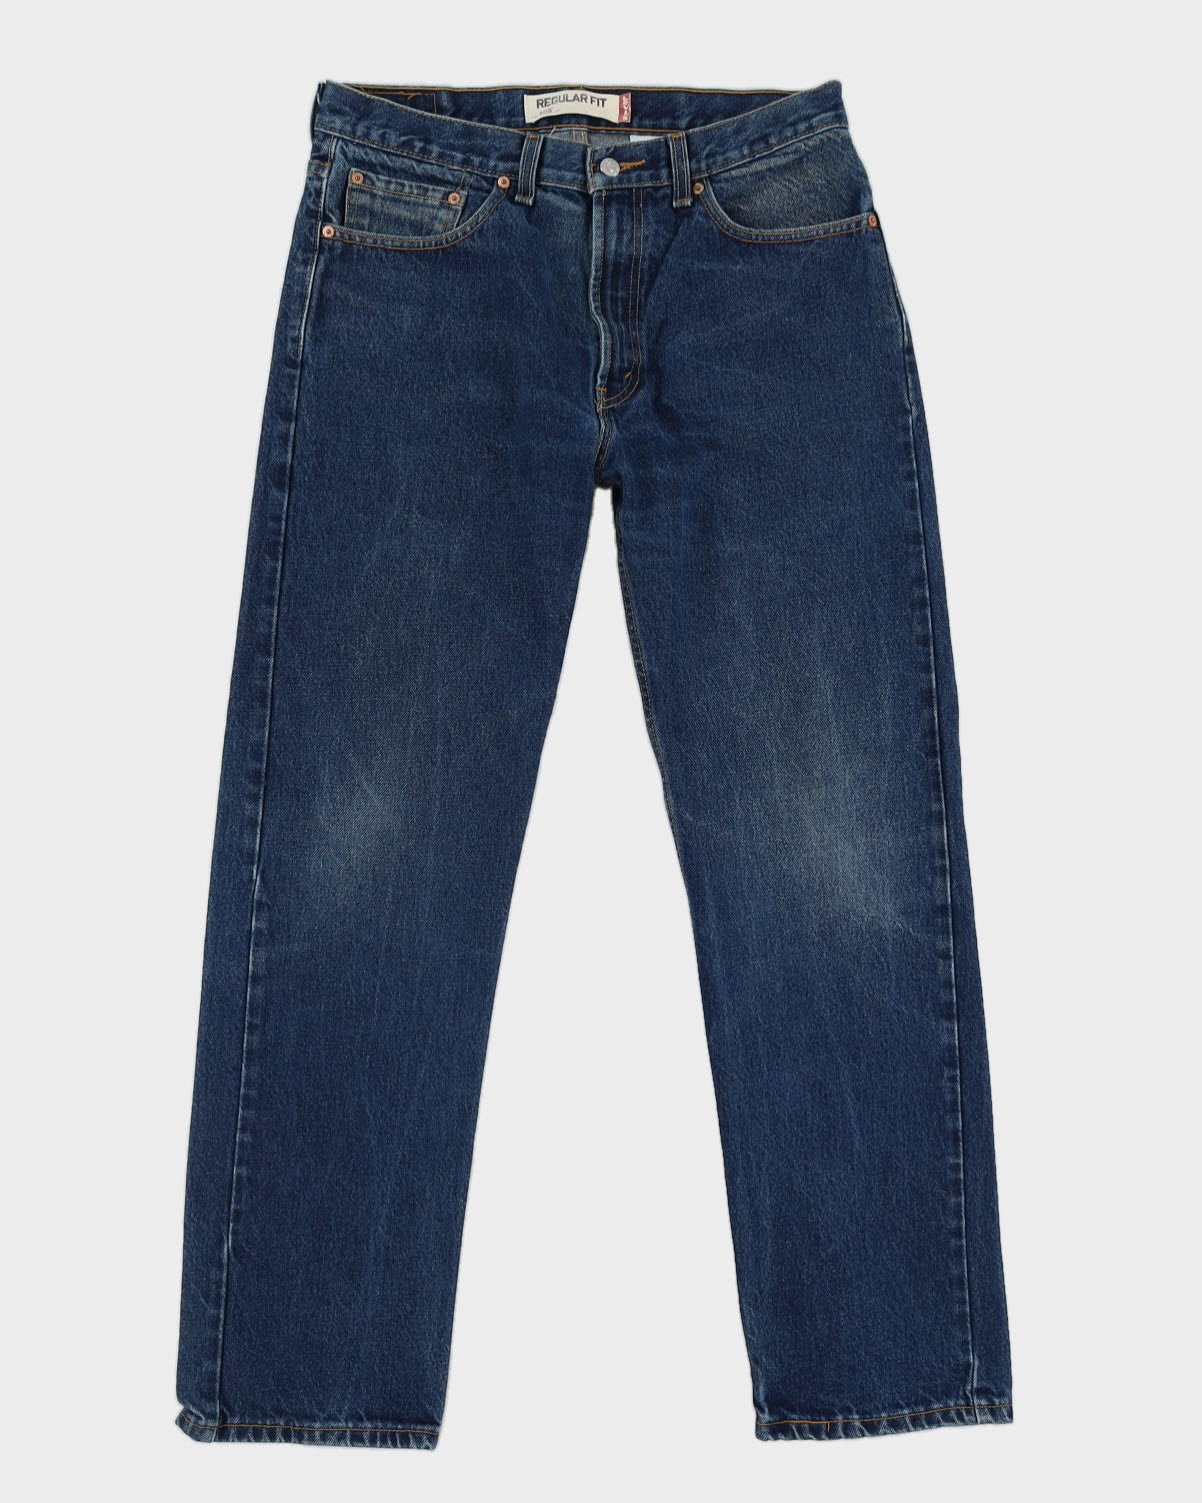 Levi's 505 Blank Tab Dark Washed Blue Jeans - W34 L32